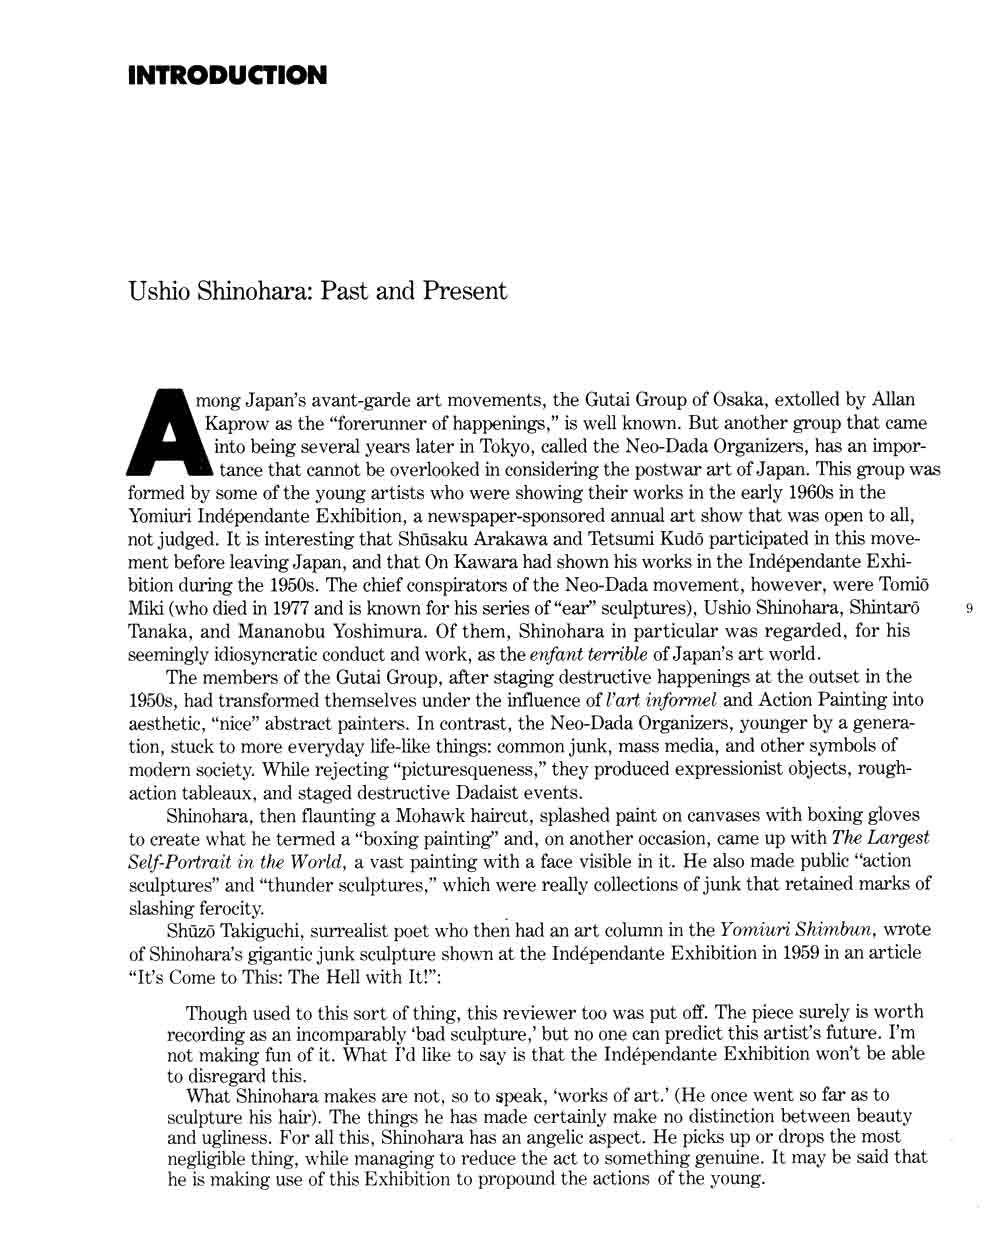 Ushio Shinohara: Past and Present, essay, pg 1